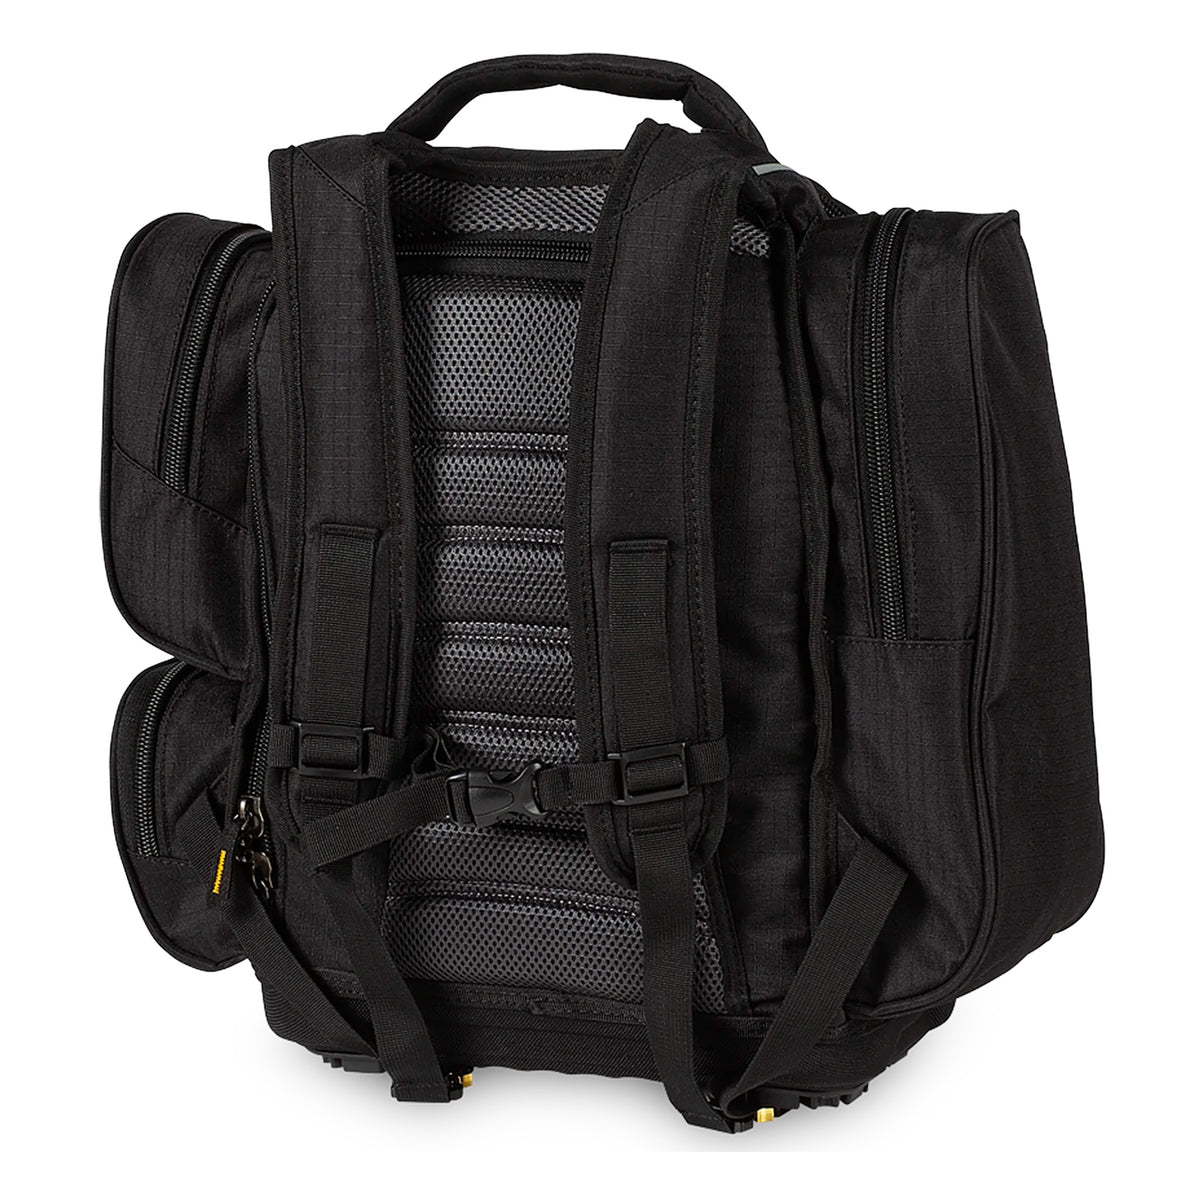 rugged xtreme fifo transit backpack